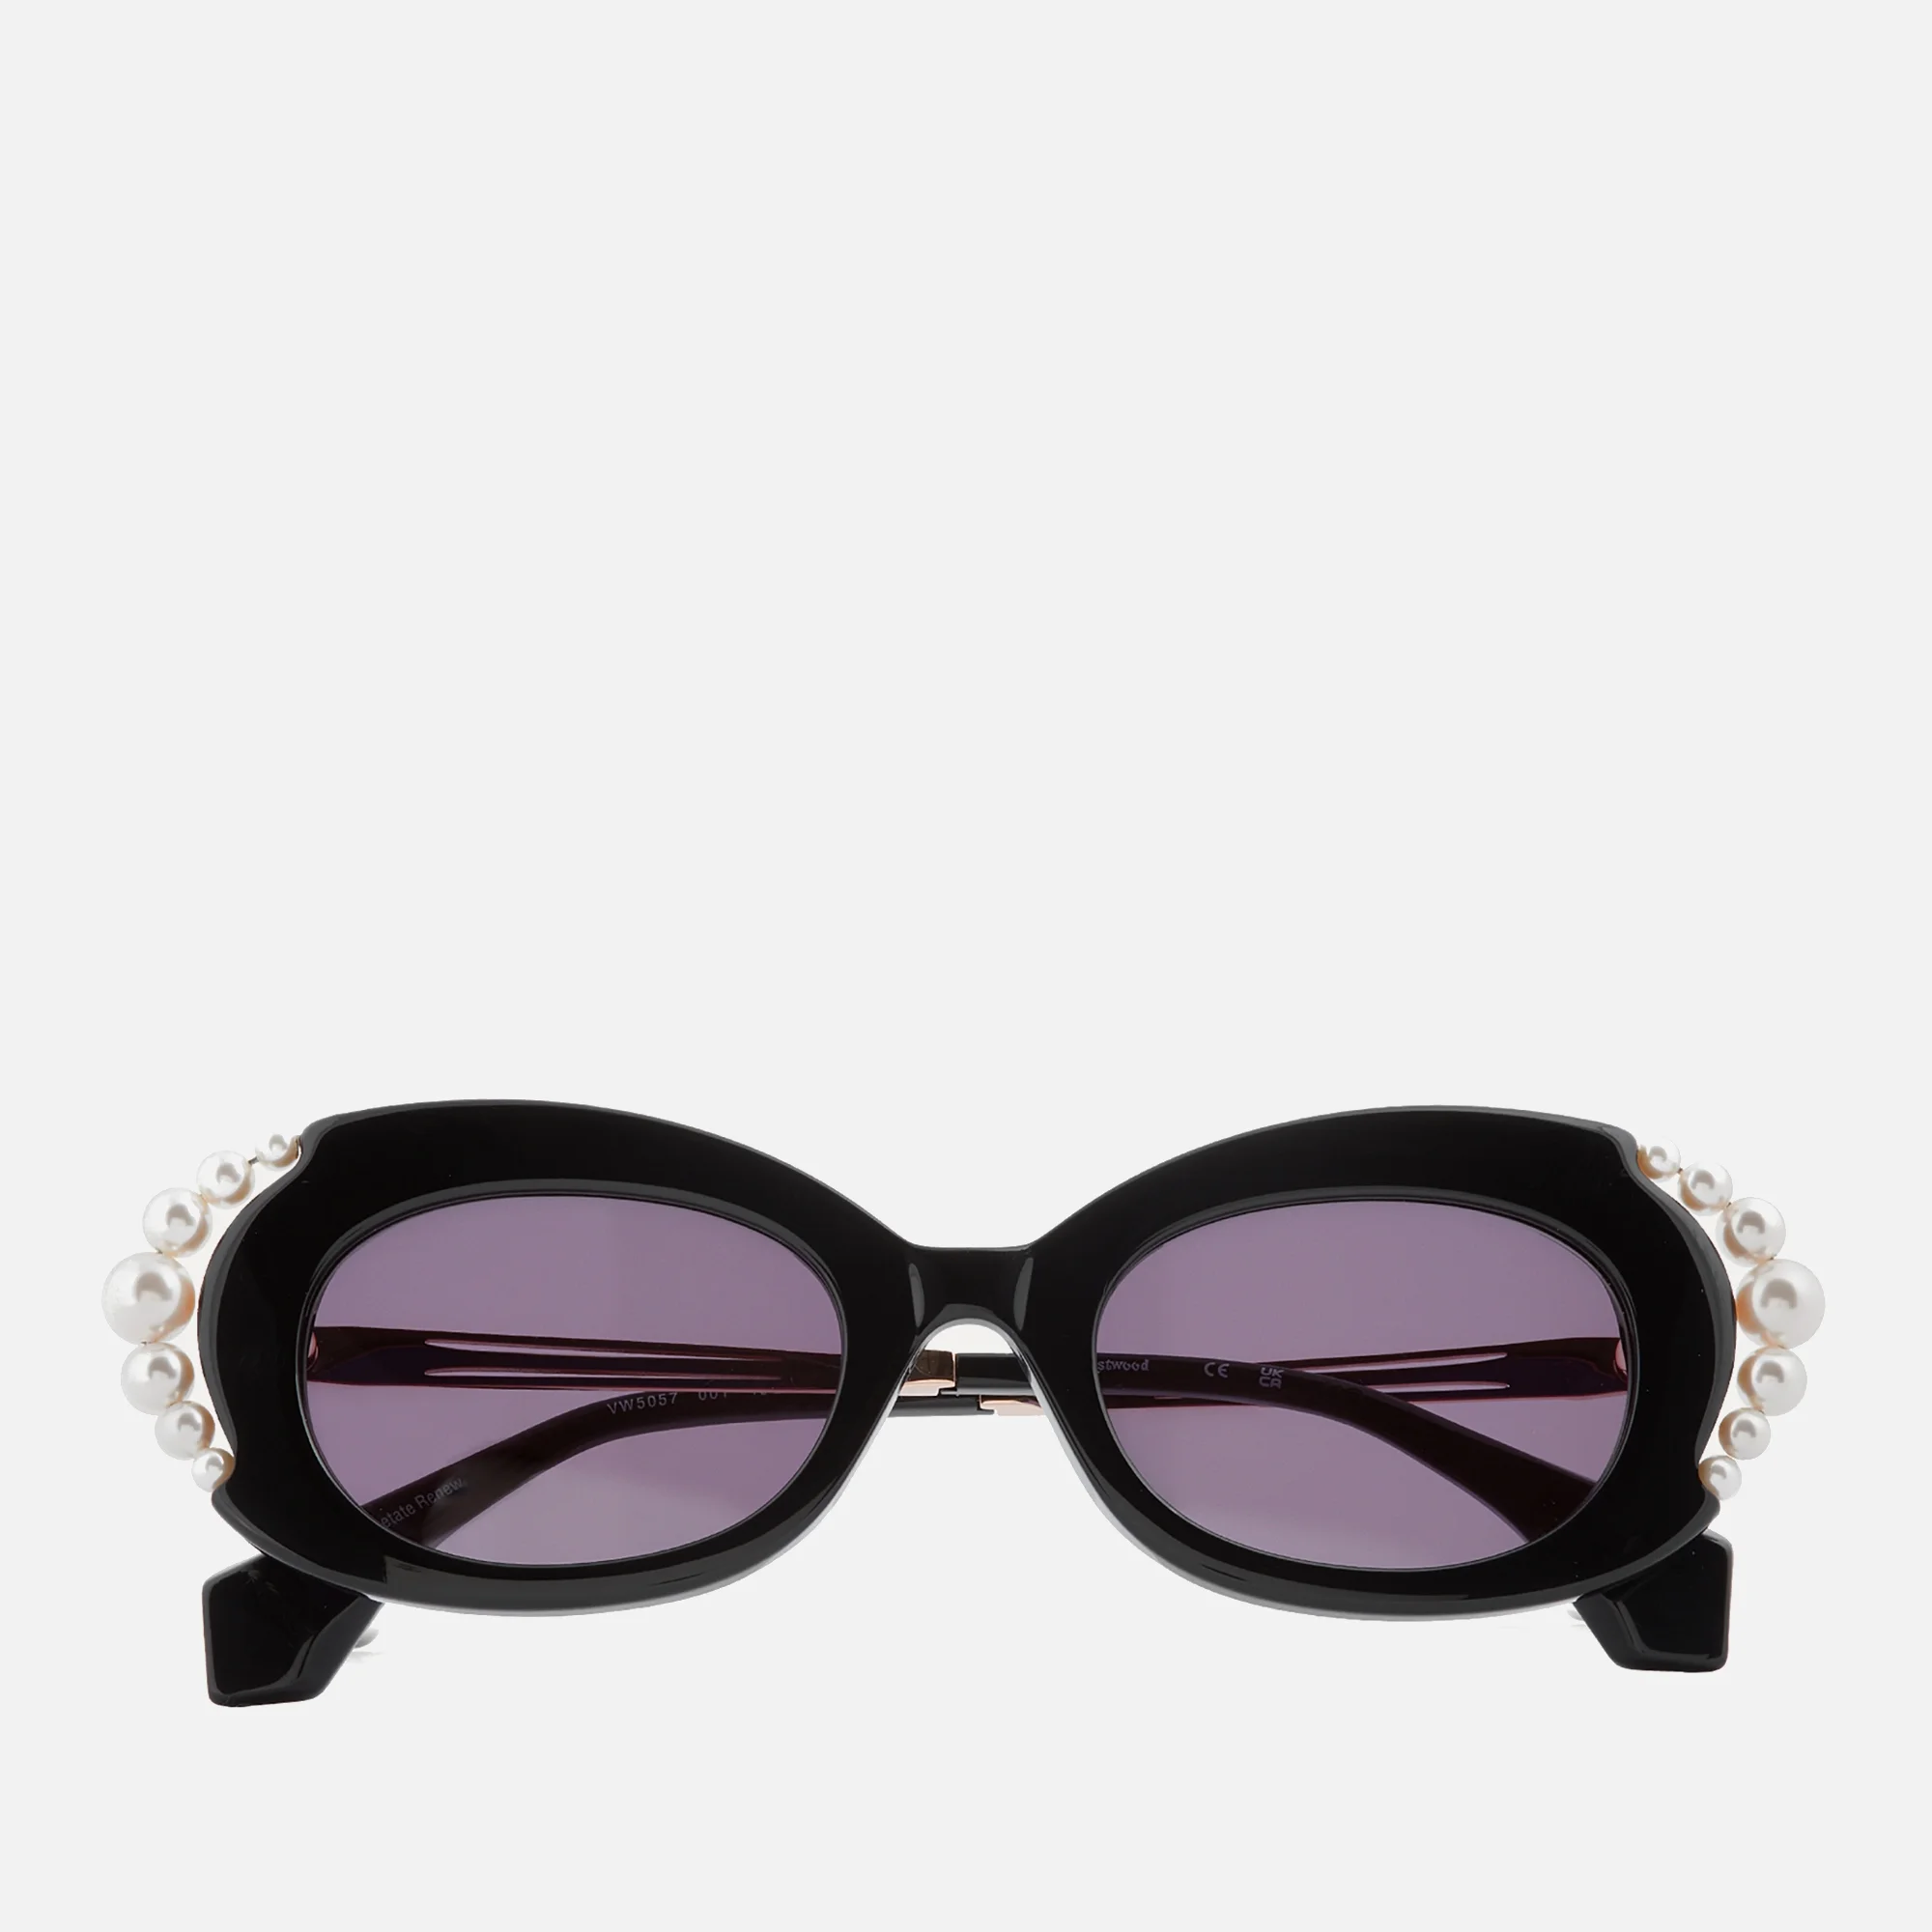 Vivienne Westwood Women's Pearl Cat Eye Sunglasses - Shiny Solid Black Image 1